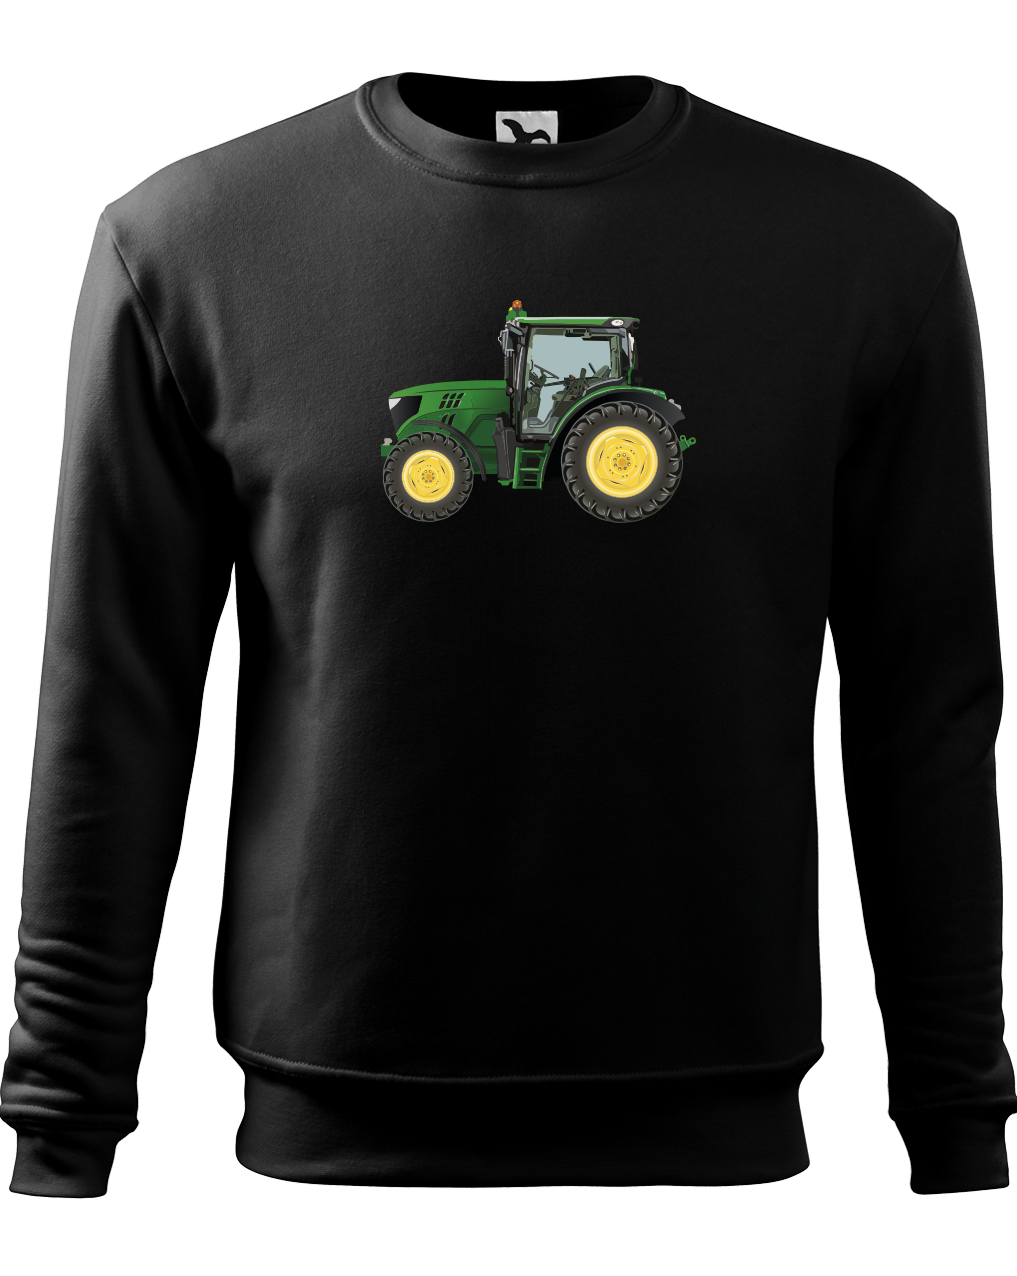 Mikina s traktorem - Zelený traktor Velikost: M, Barva: Černá